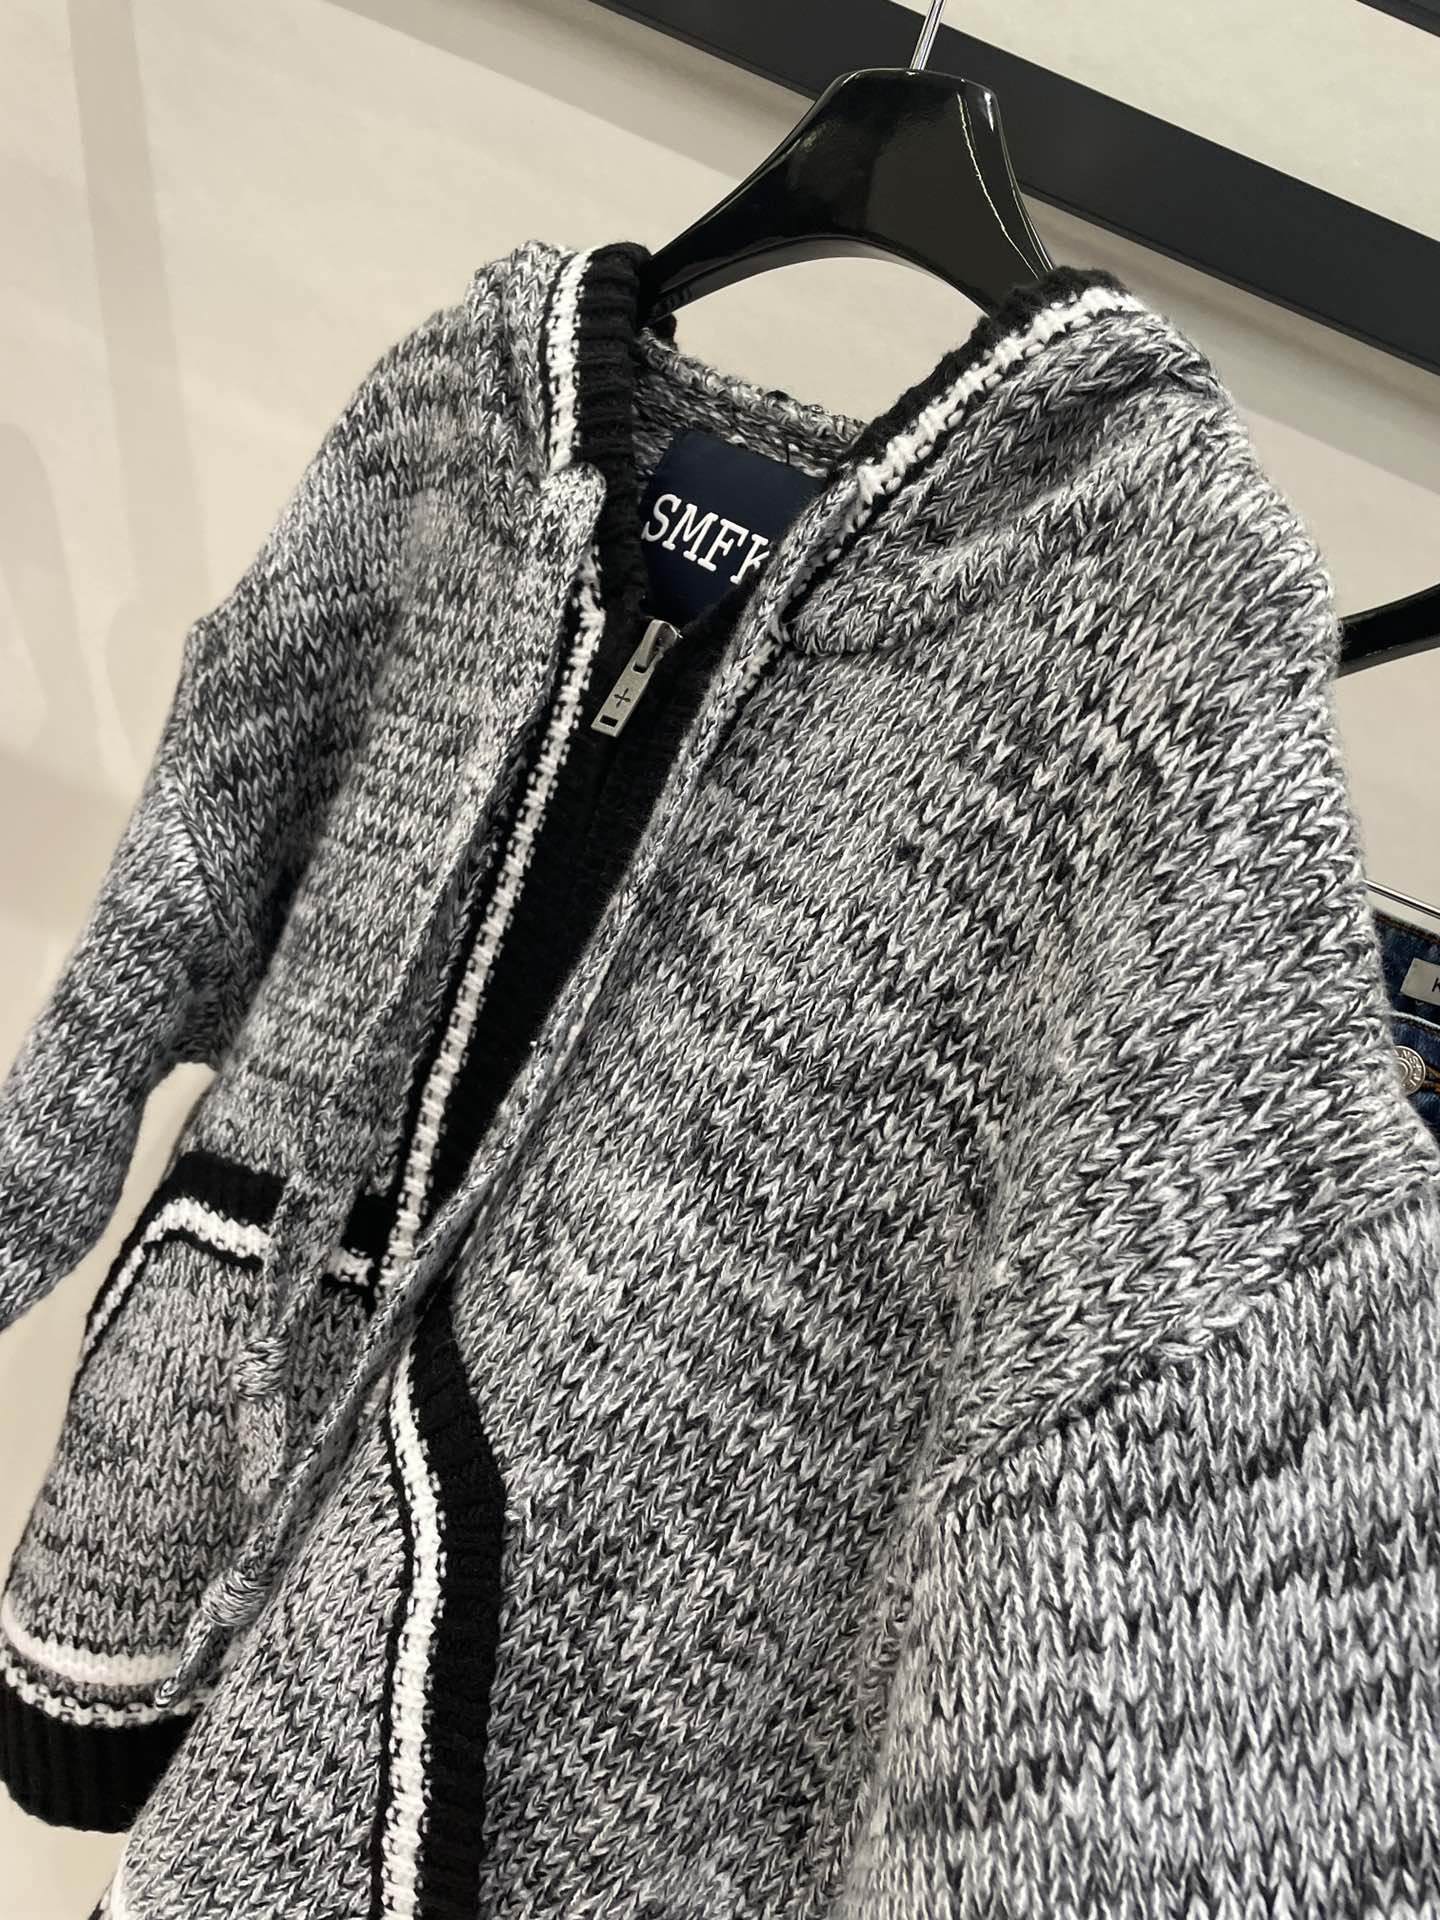 SMFKセーター a激安通販 長袖トップス ニット フード付き 柔らかい ファッション レディース グレイ_3